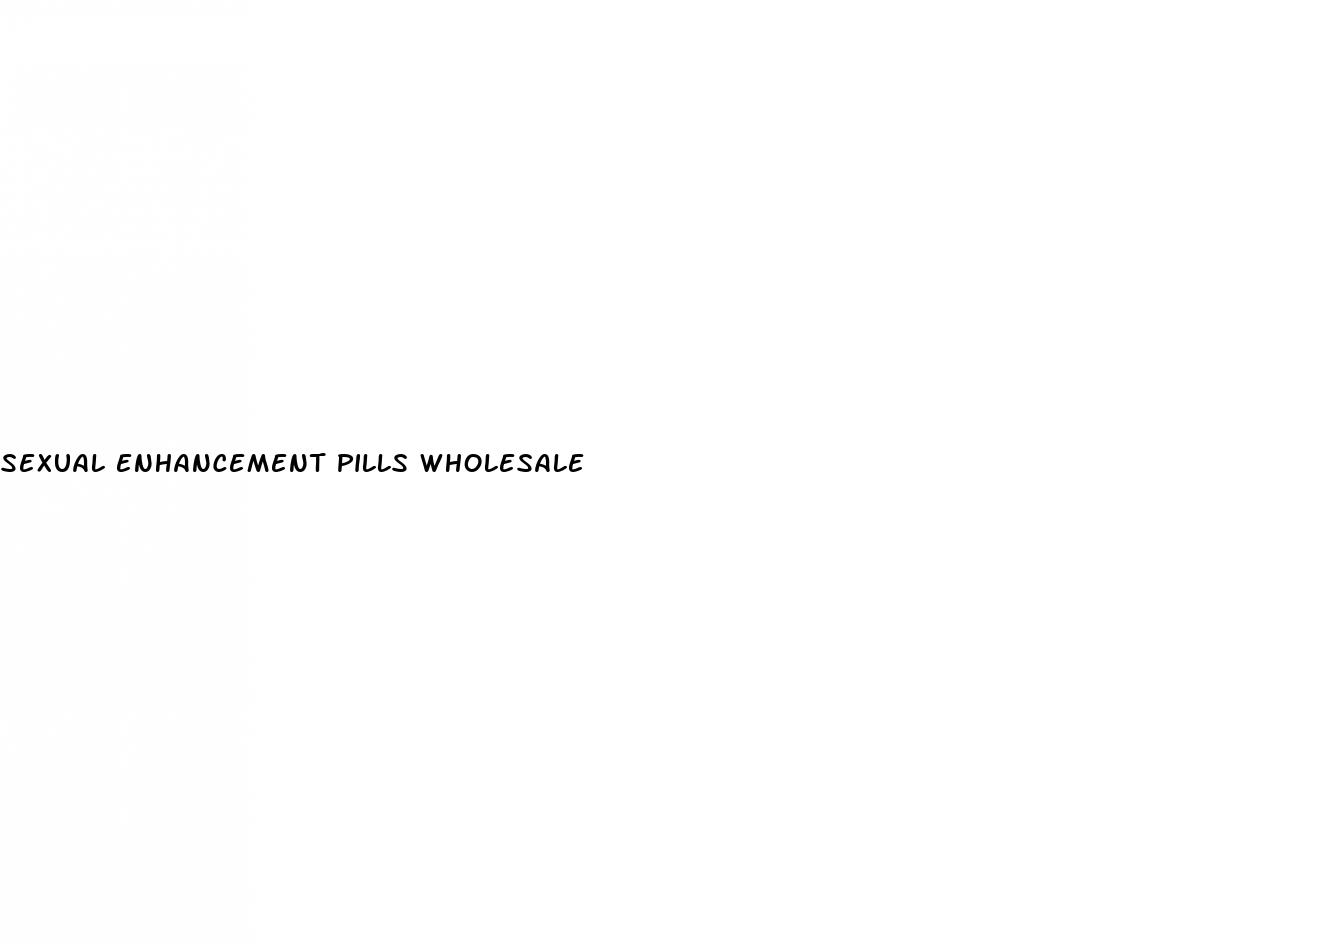 sexual enhancement pills wholesale